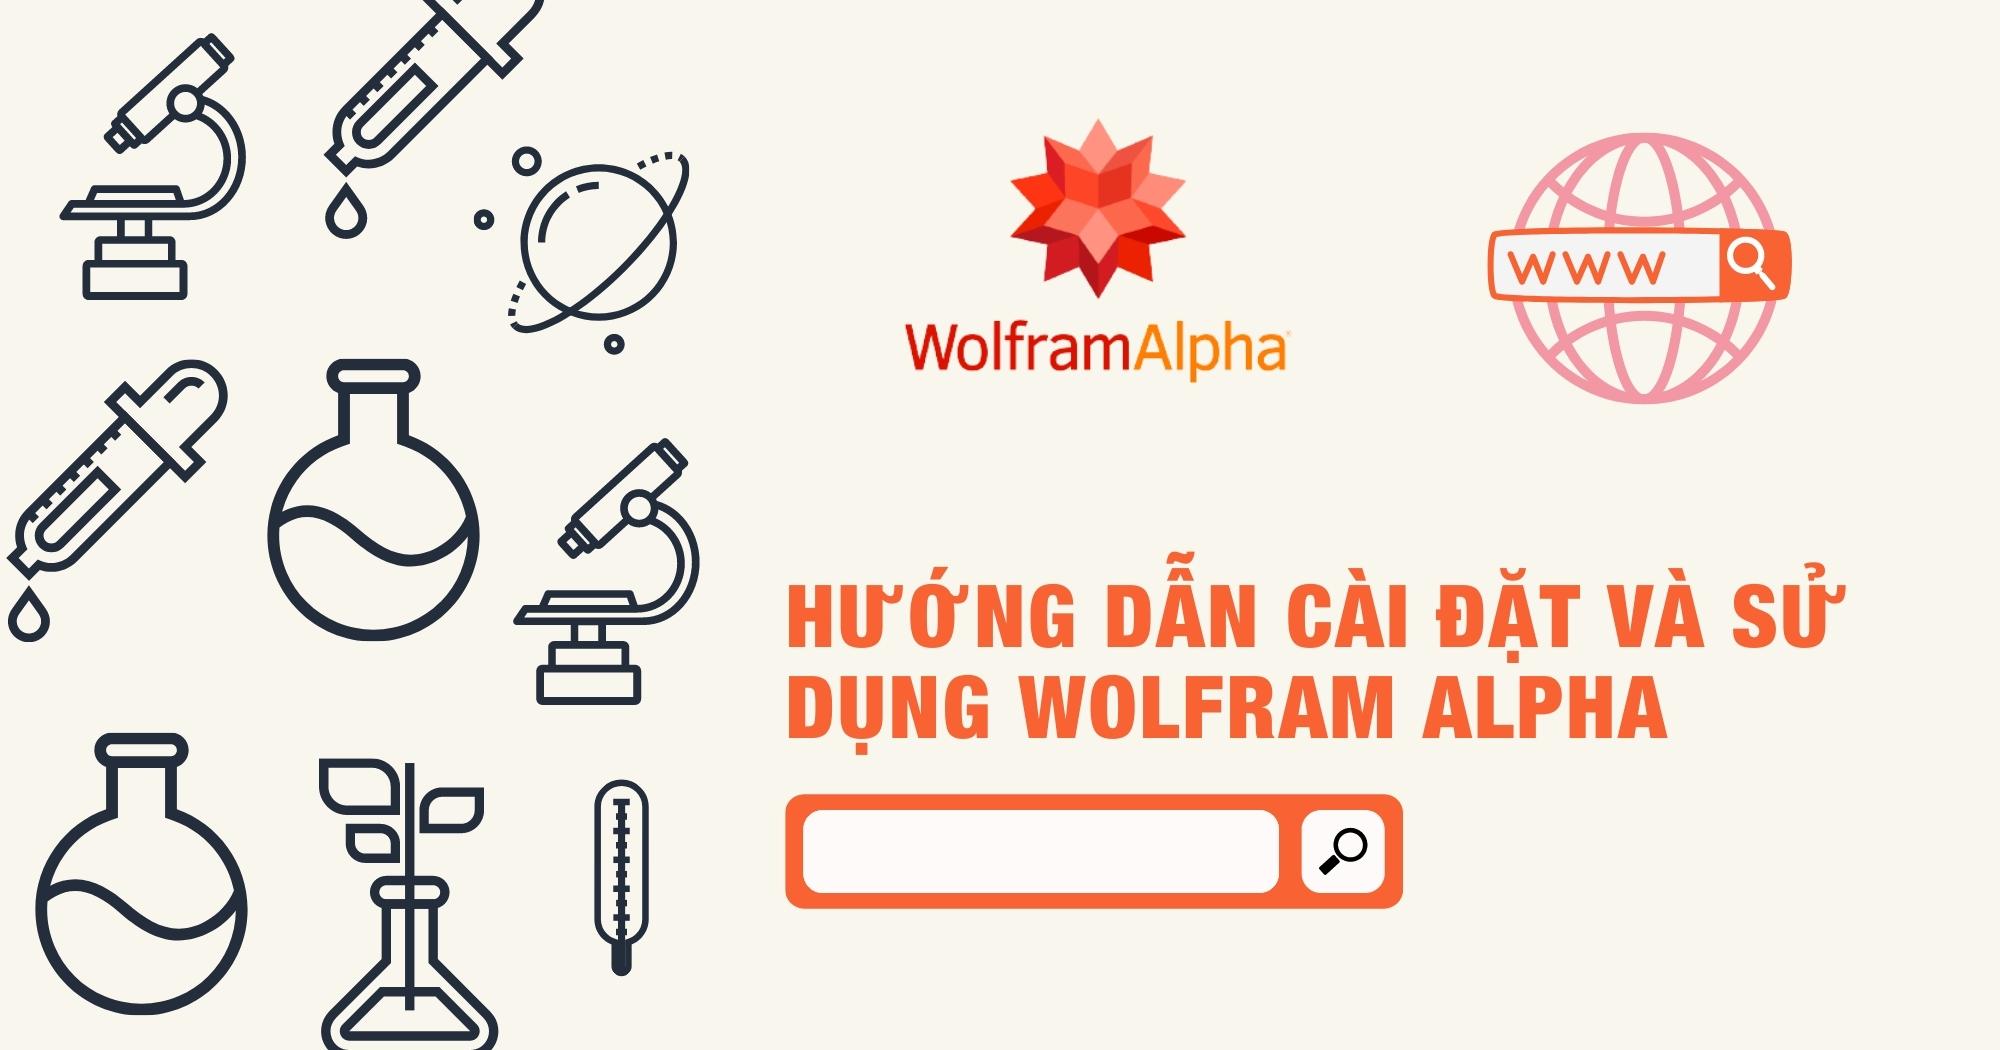 Tại sao nên sử dụng Wolfram Alpha?
